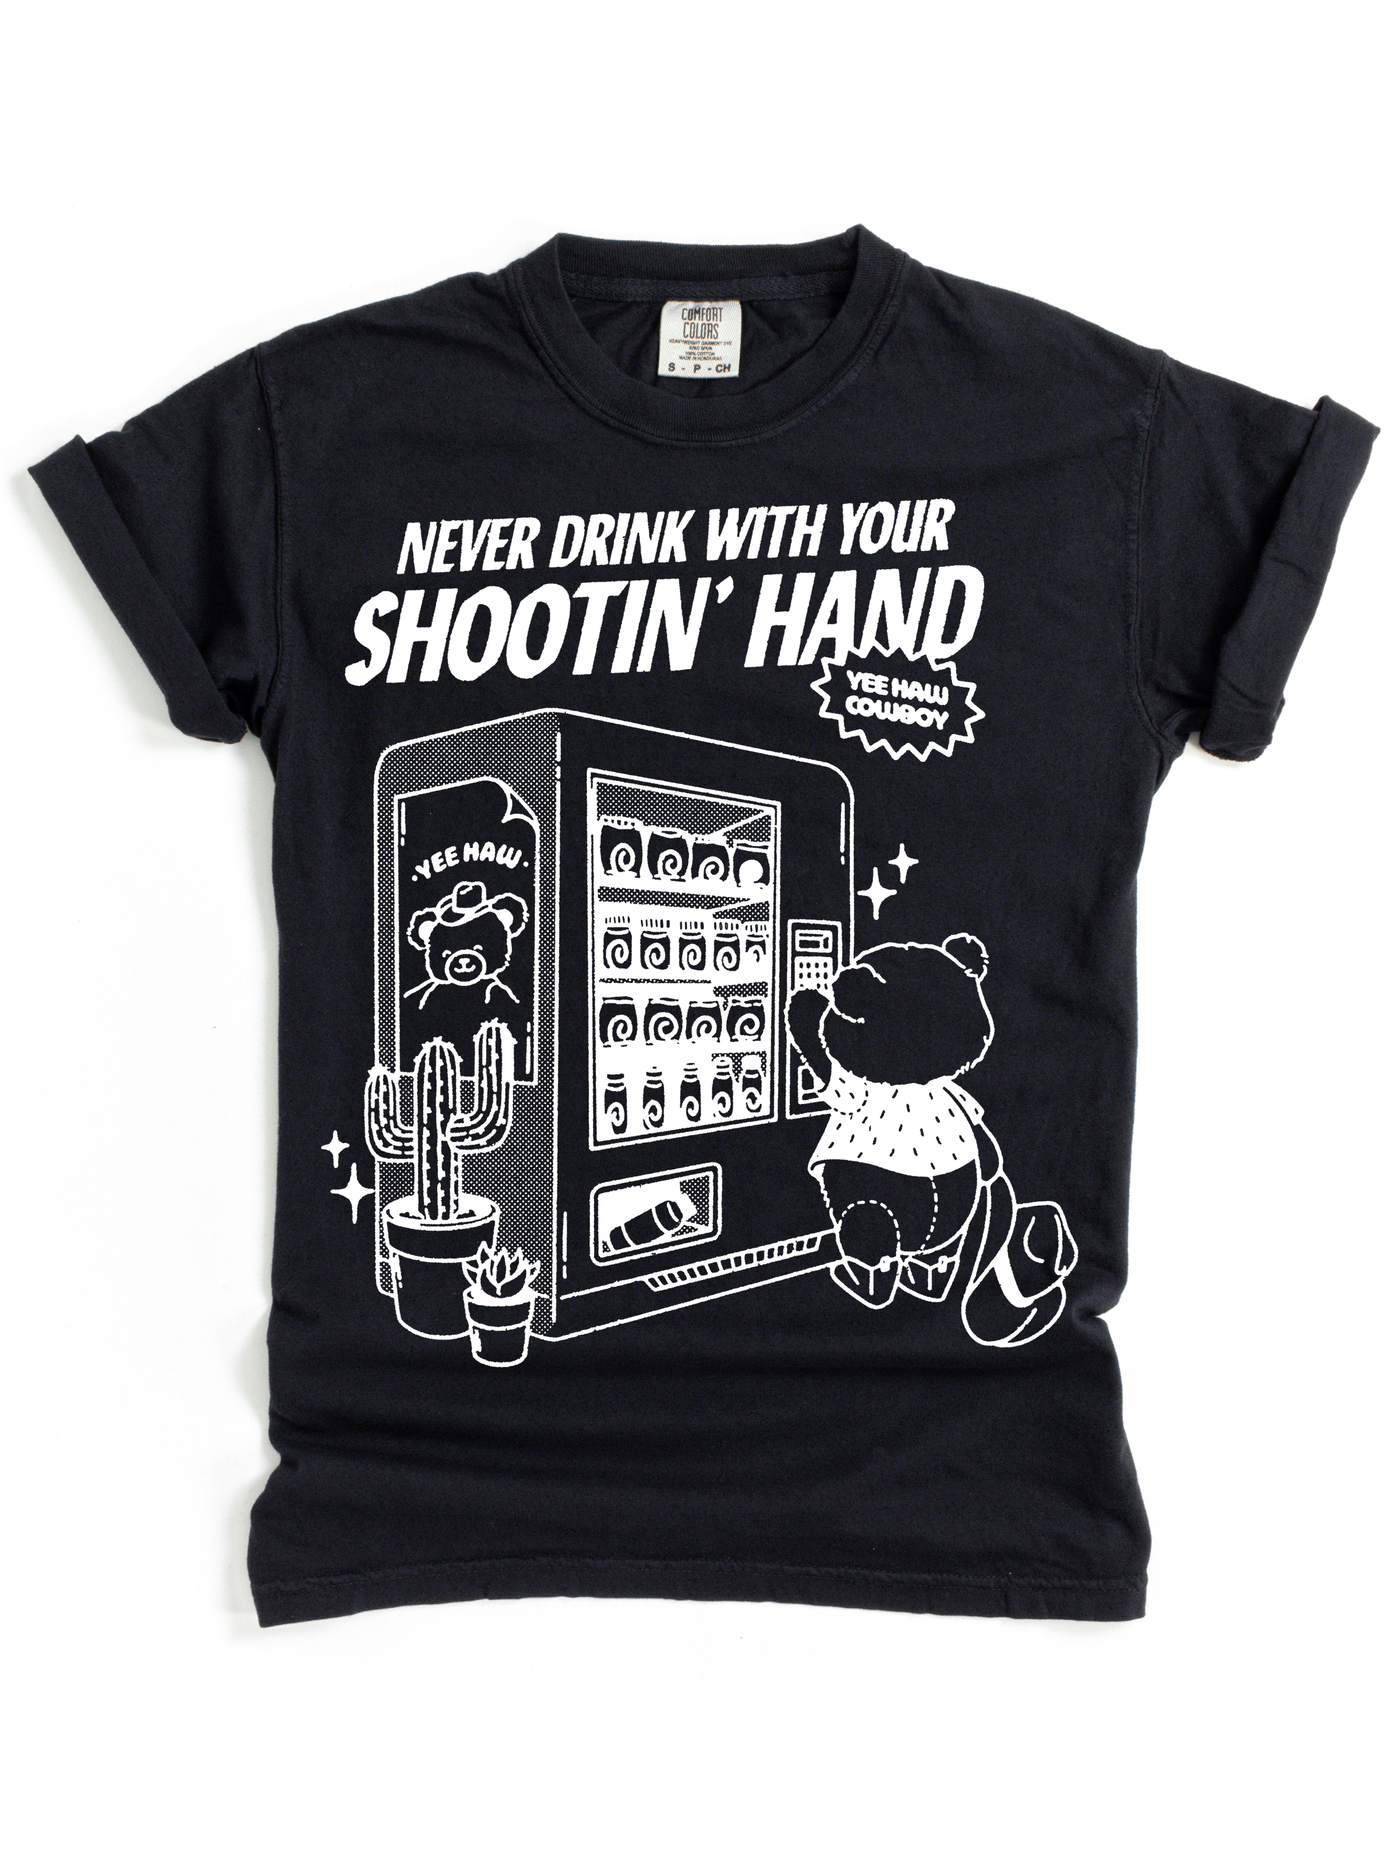 Shootin' Hand Black & White Tee/Sweatshirt